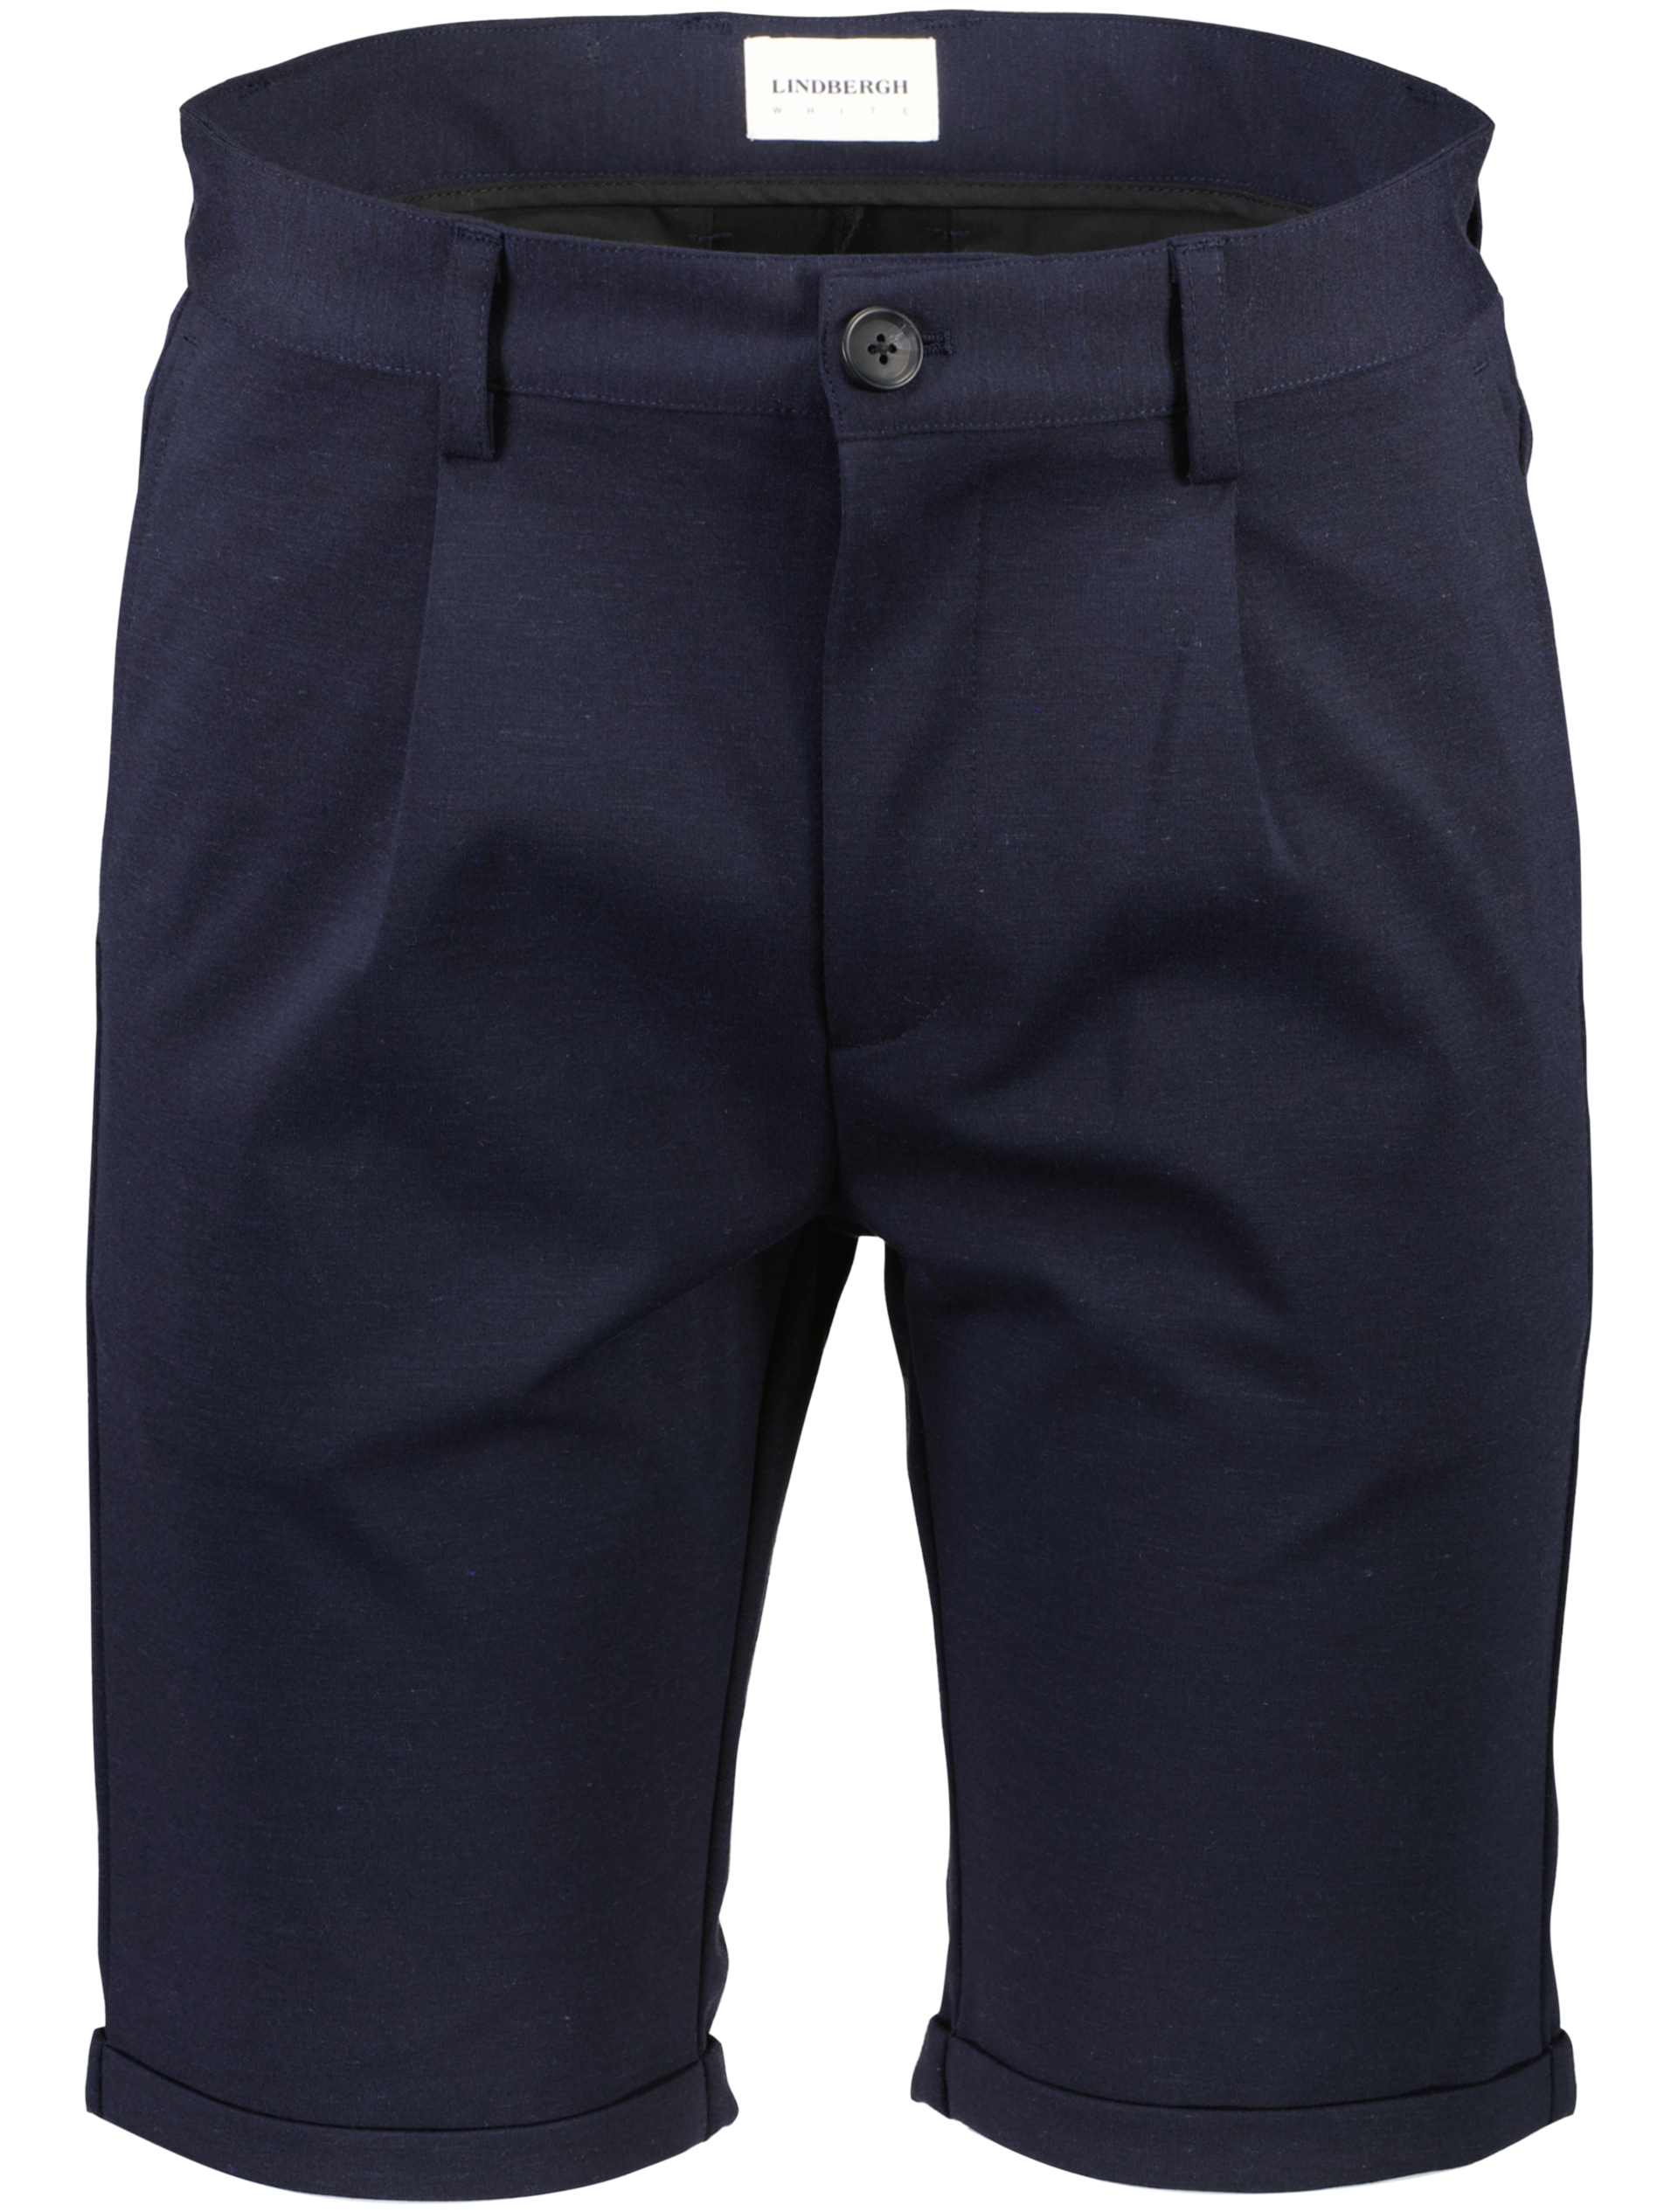 Lindbergh Pantalon korte broek blauw / navy